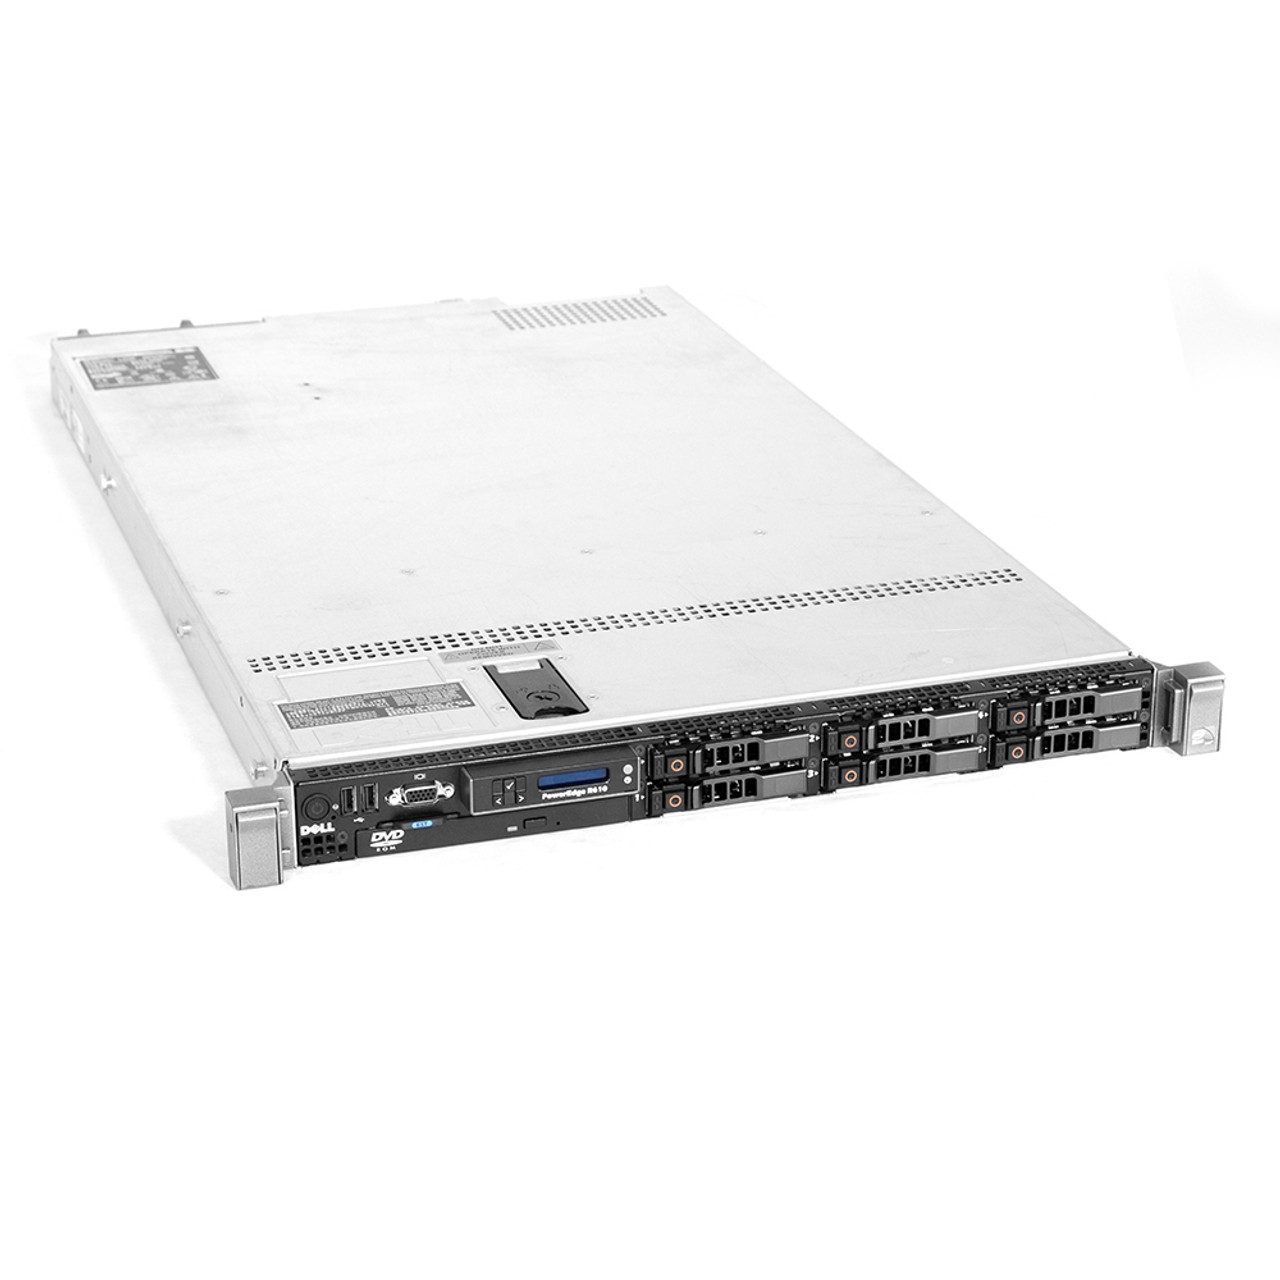 Refurbished R610 Server | Dell PowerEdge R610 | SaveMyServer